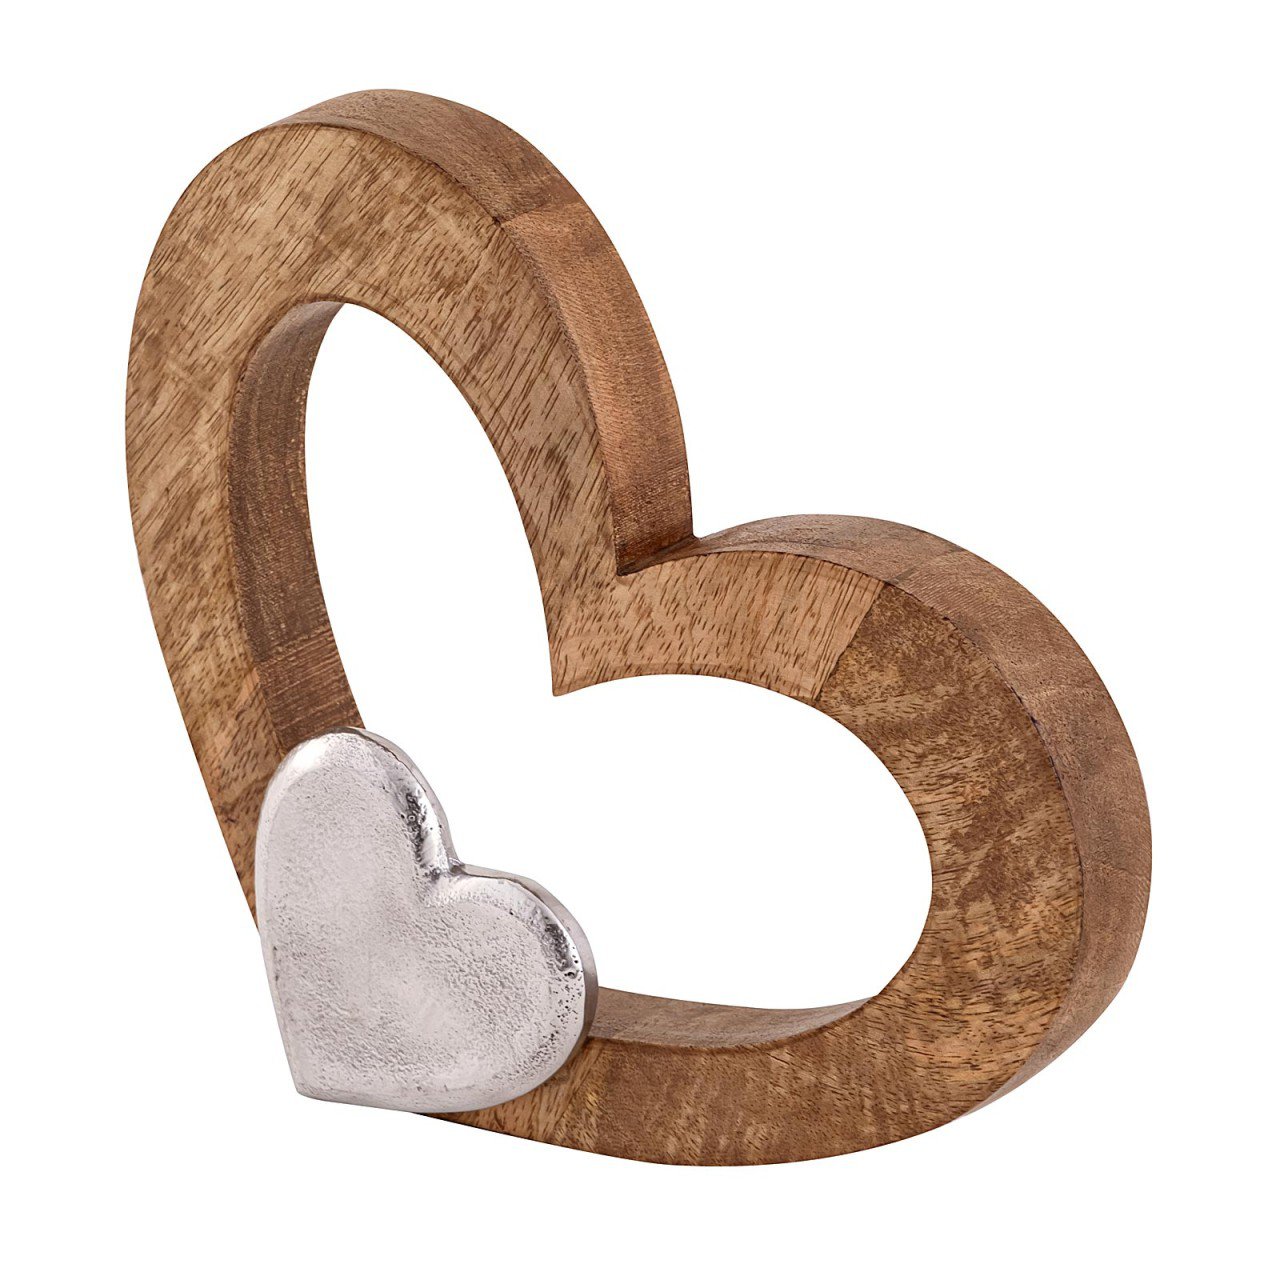 Decoratief hartfiguur 27x21cm houten figuur klein hartje mangohout aluminium